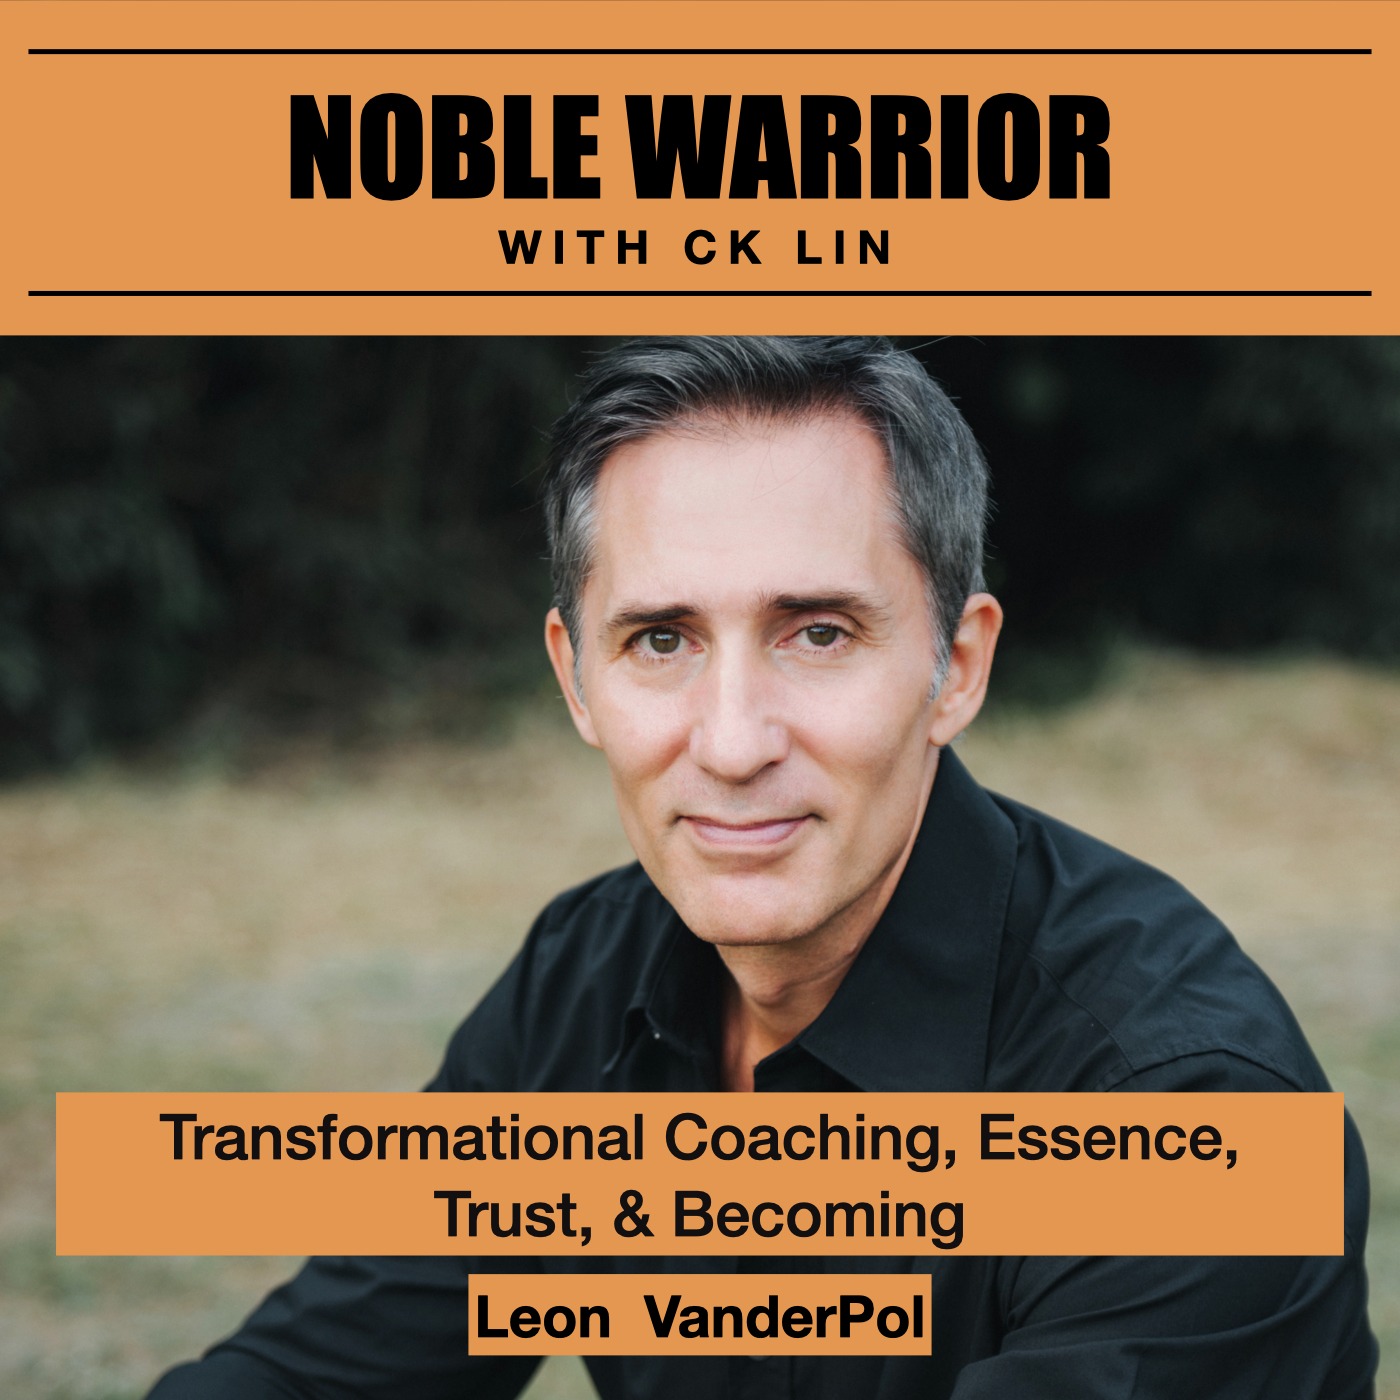 149 Leon VanderPol: Transformational Coaching, Essence, Trust, & Becoming Image